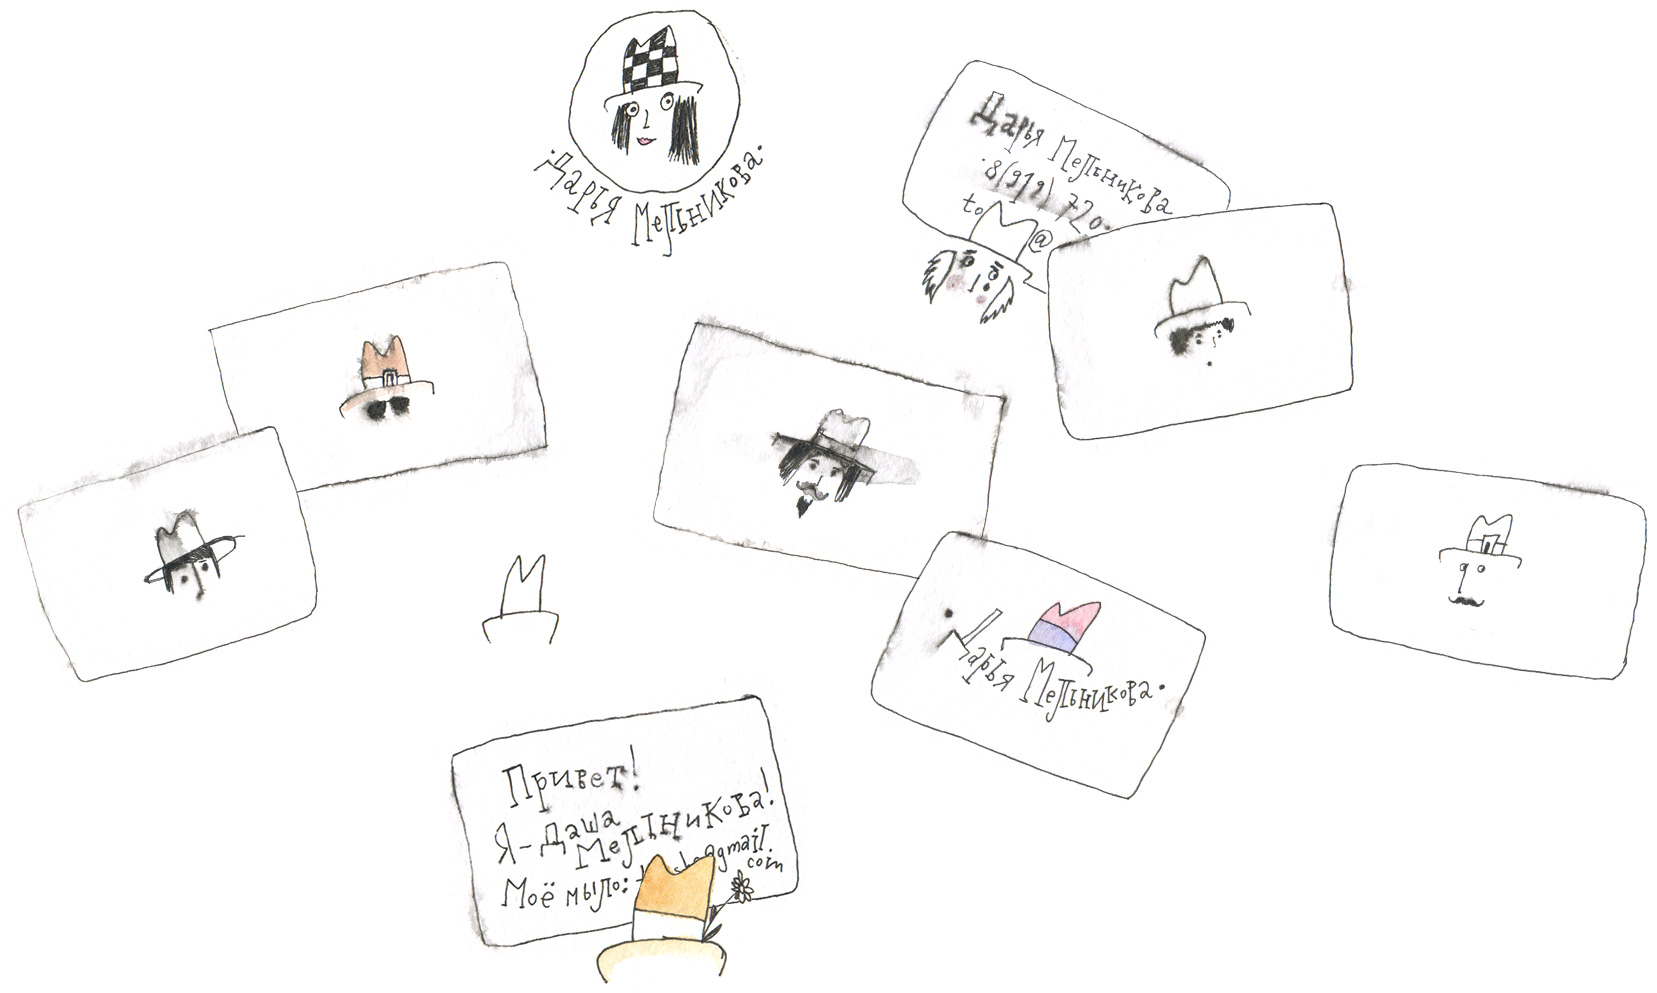 entirely hand-drawn identity cards for Daria